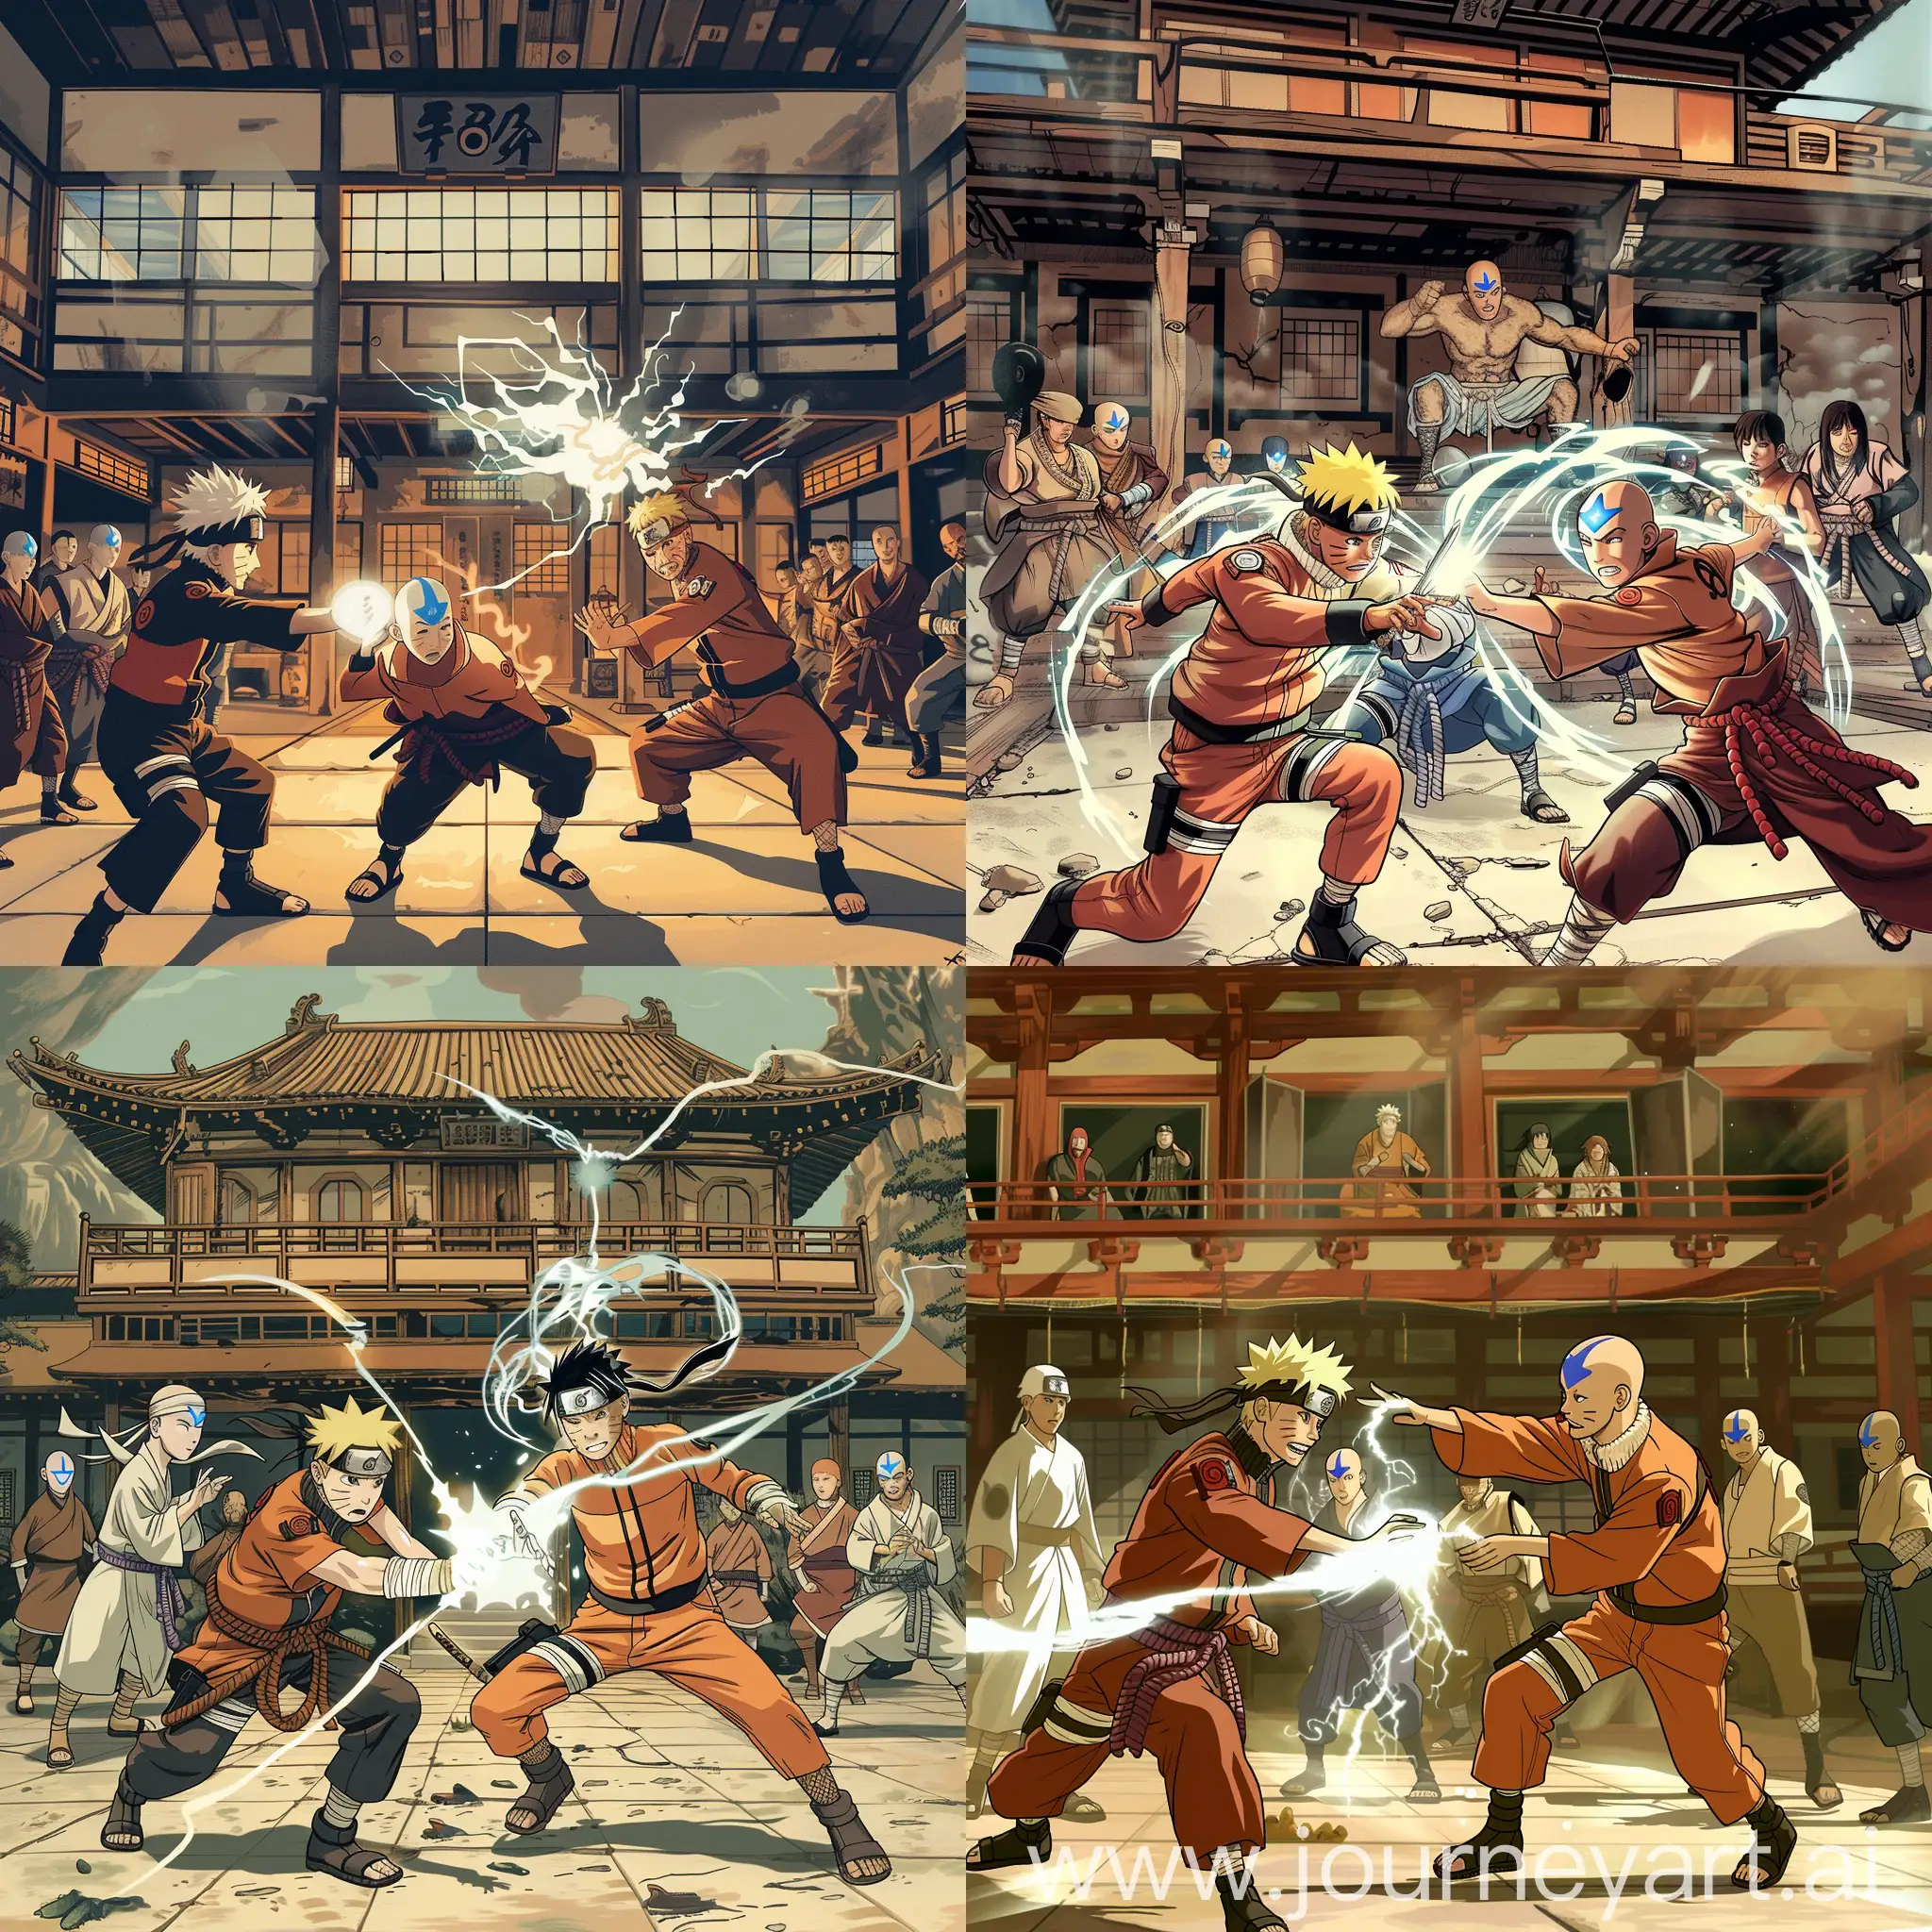 Epic-Battle-Naruto-vs-Aang-with-White-Magic-Spells-at-Japanese-Dojo